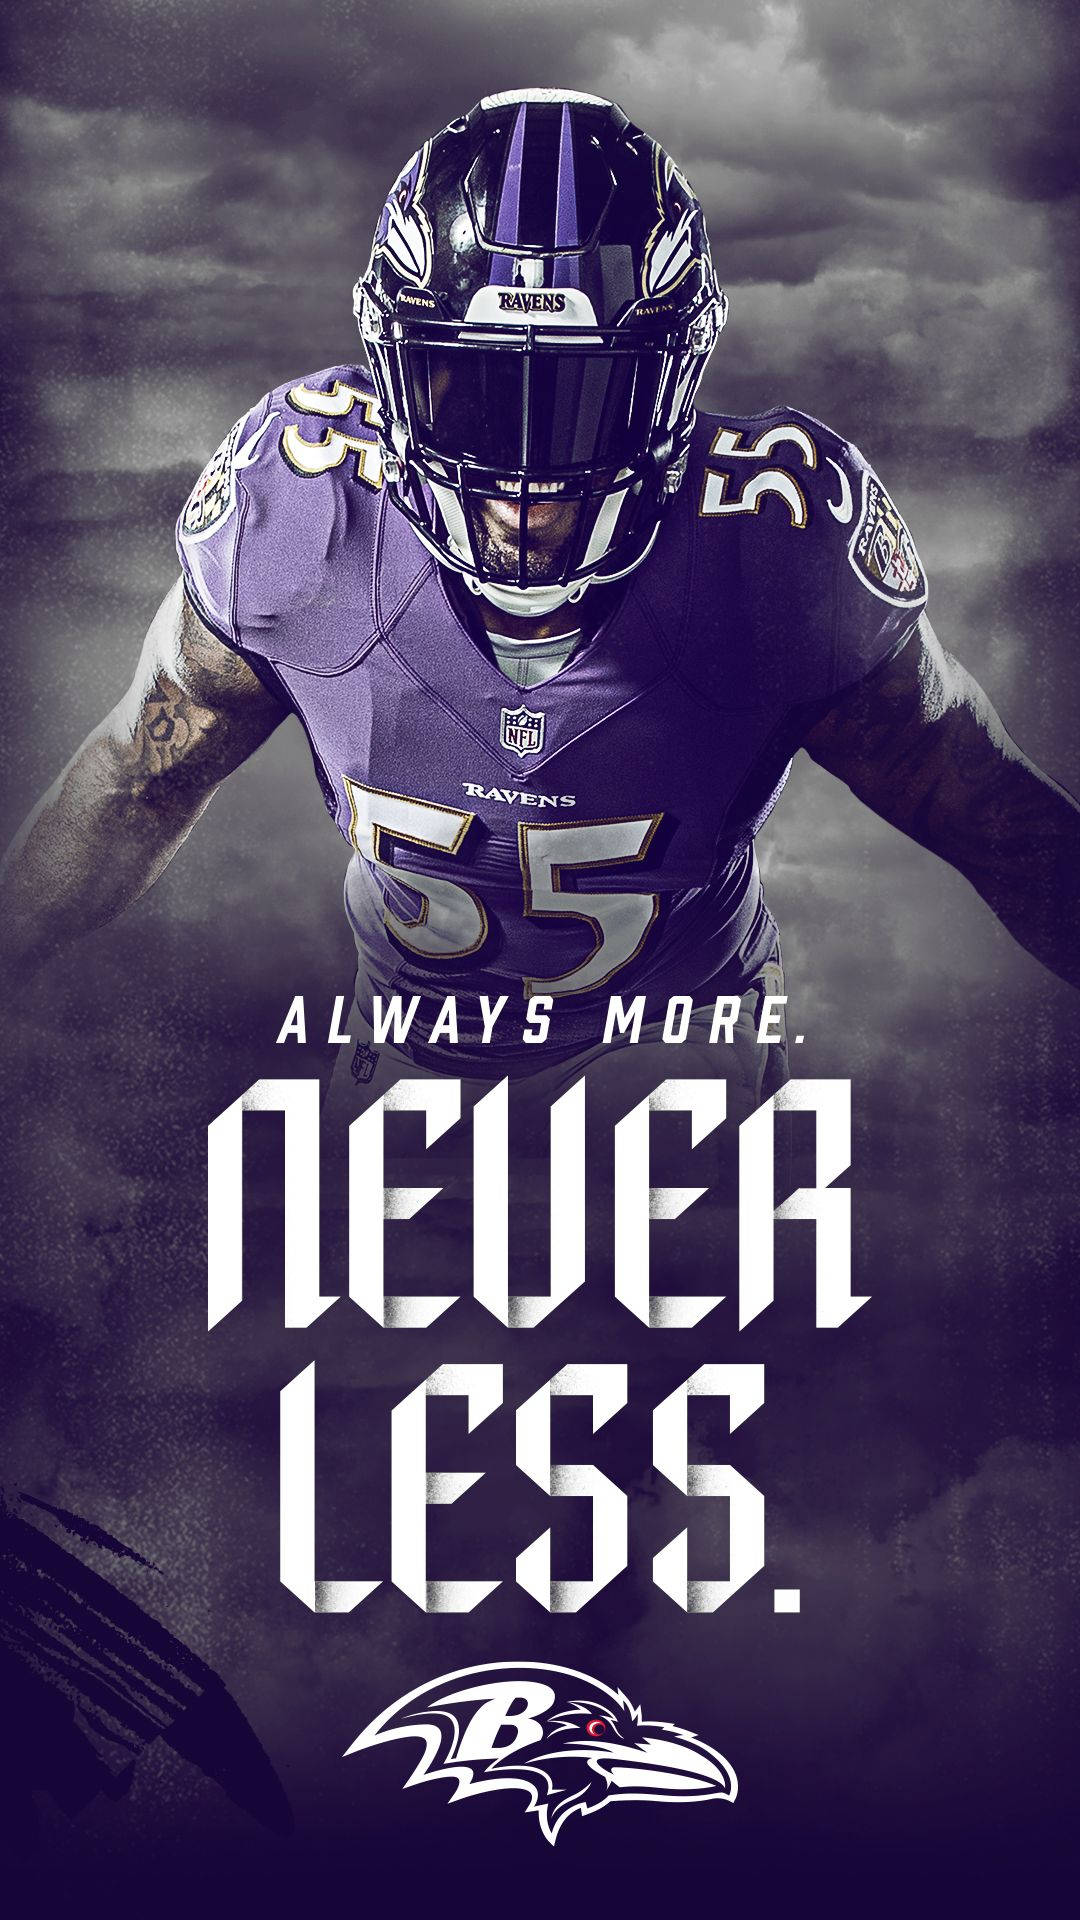 Baltimore Ravens Concept Poster